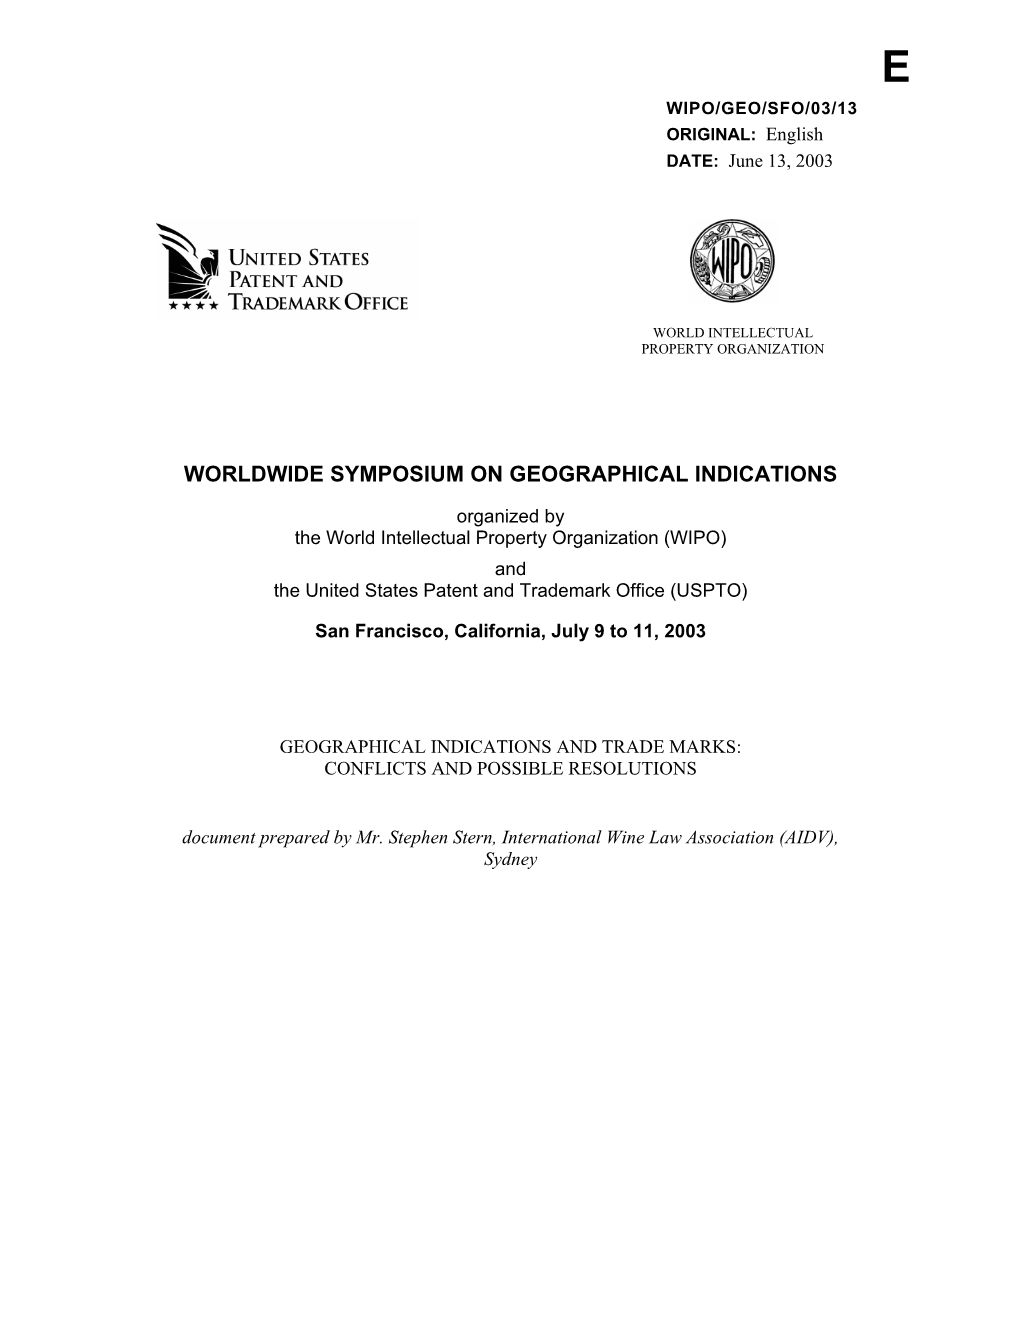 Worldwide Symposium on Geographical Indications